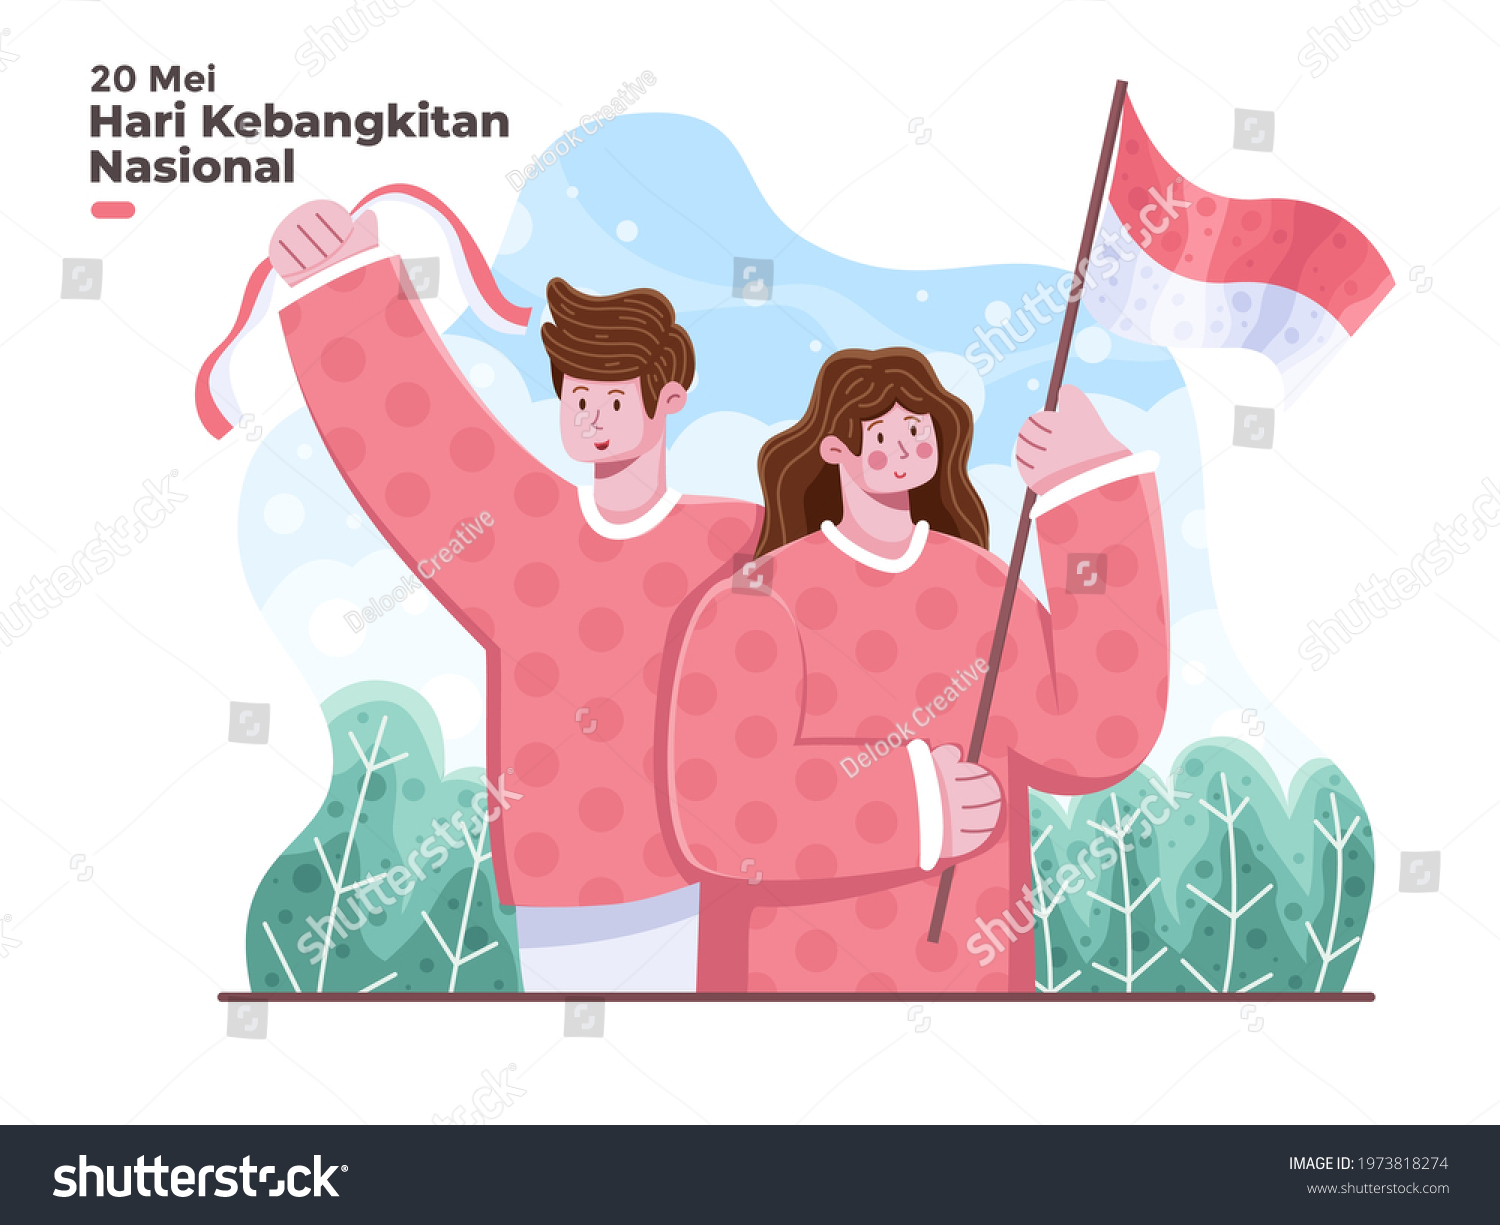 SVG of Indonesian, Hari Kebangkitan Nasional 20 Mei illustration Translated: National Awakening Day 20 may. Indonesian independence and awakening day celebration illustration with flat illustration of Indonesian people with flag.  svg